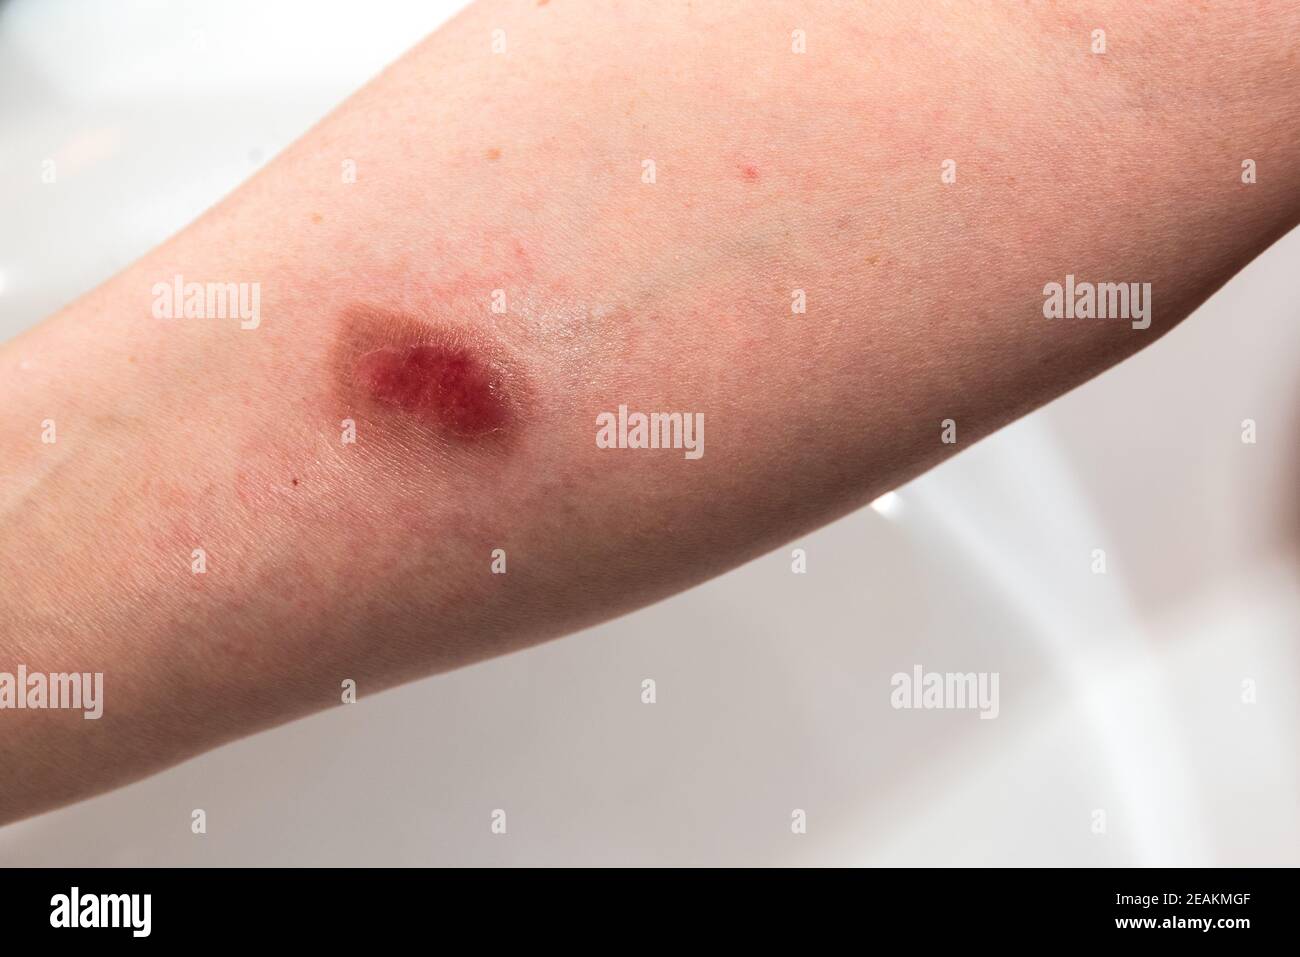 Scalded arm - burn wound Stock Photo